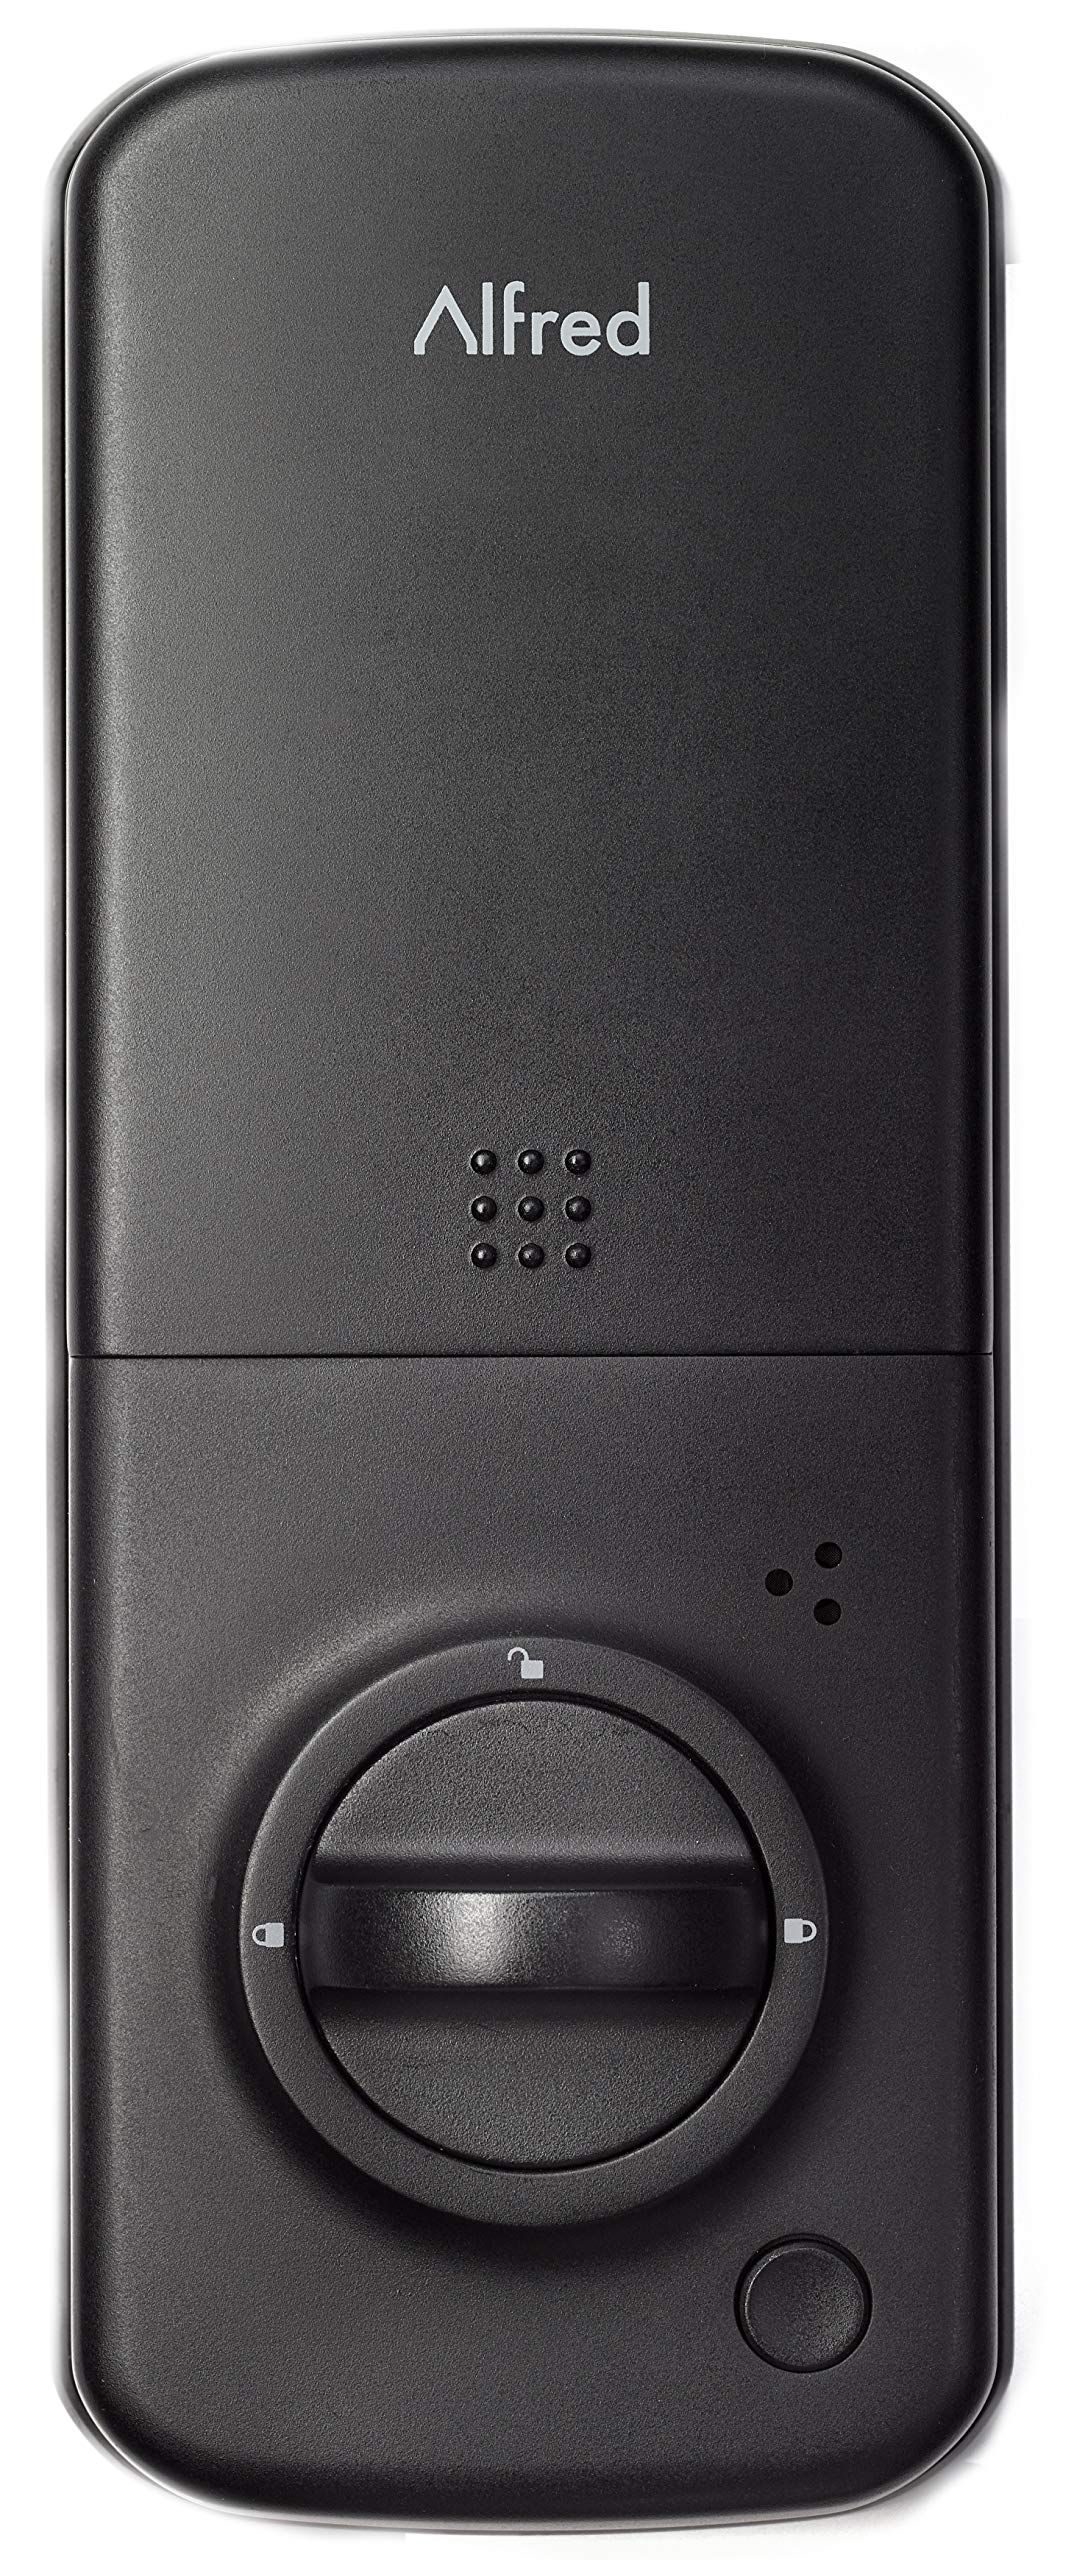 Alfred DB2-B Smart Door Lock Deadbolt Touchscreen Keypad, Pin Code + Key Entry + Bluetooth, Up to 20 Pin Codes (Gold)